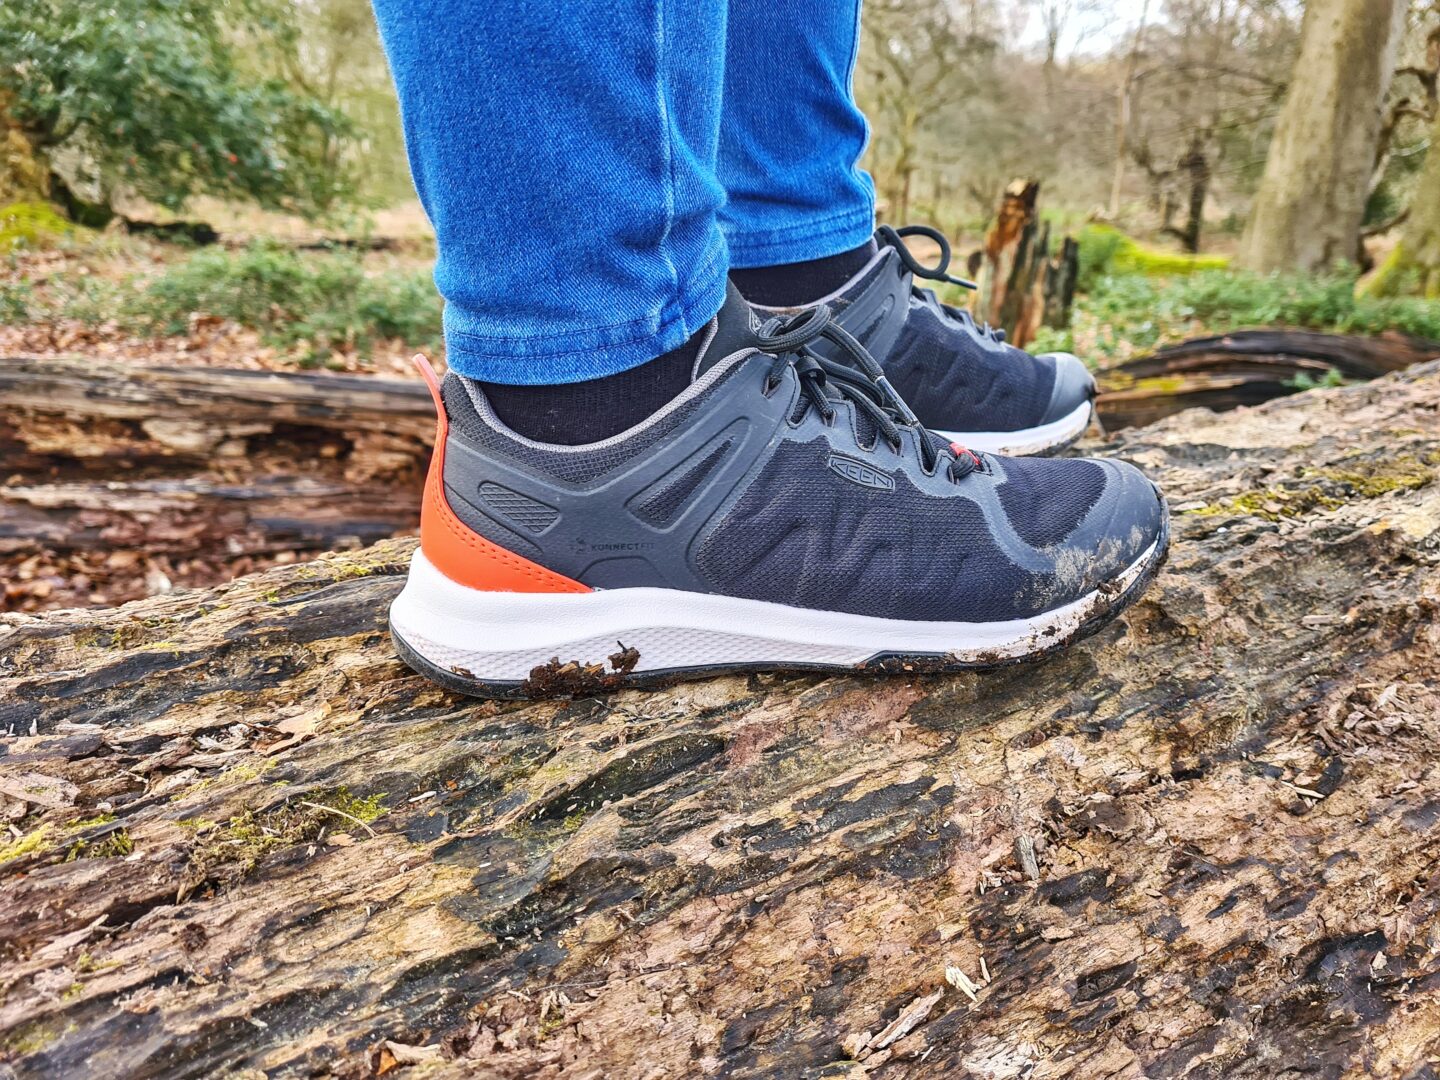 Close up of feet wearing Keen walking shoes standing on a fallen log